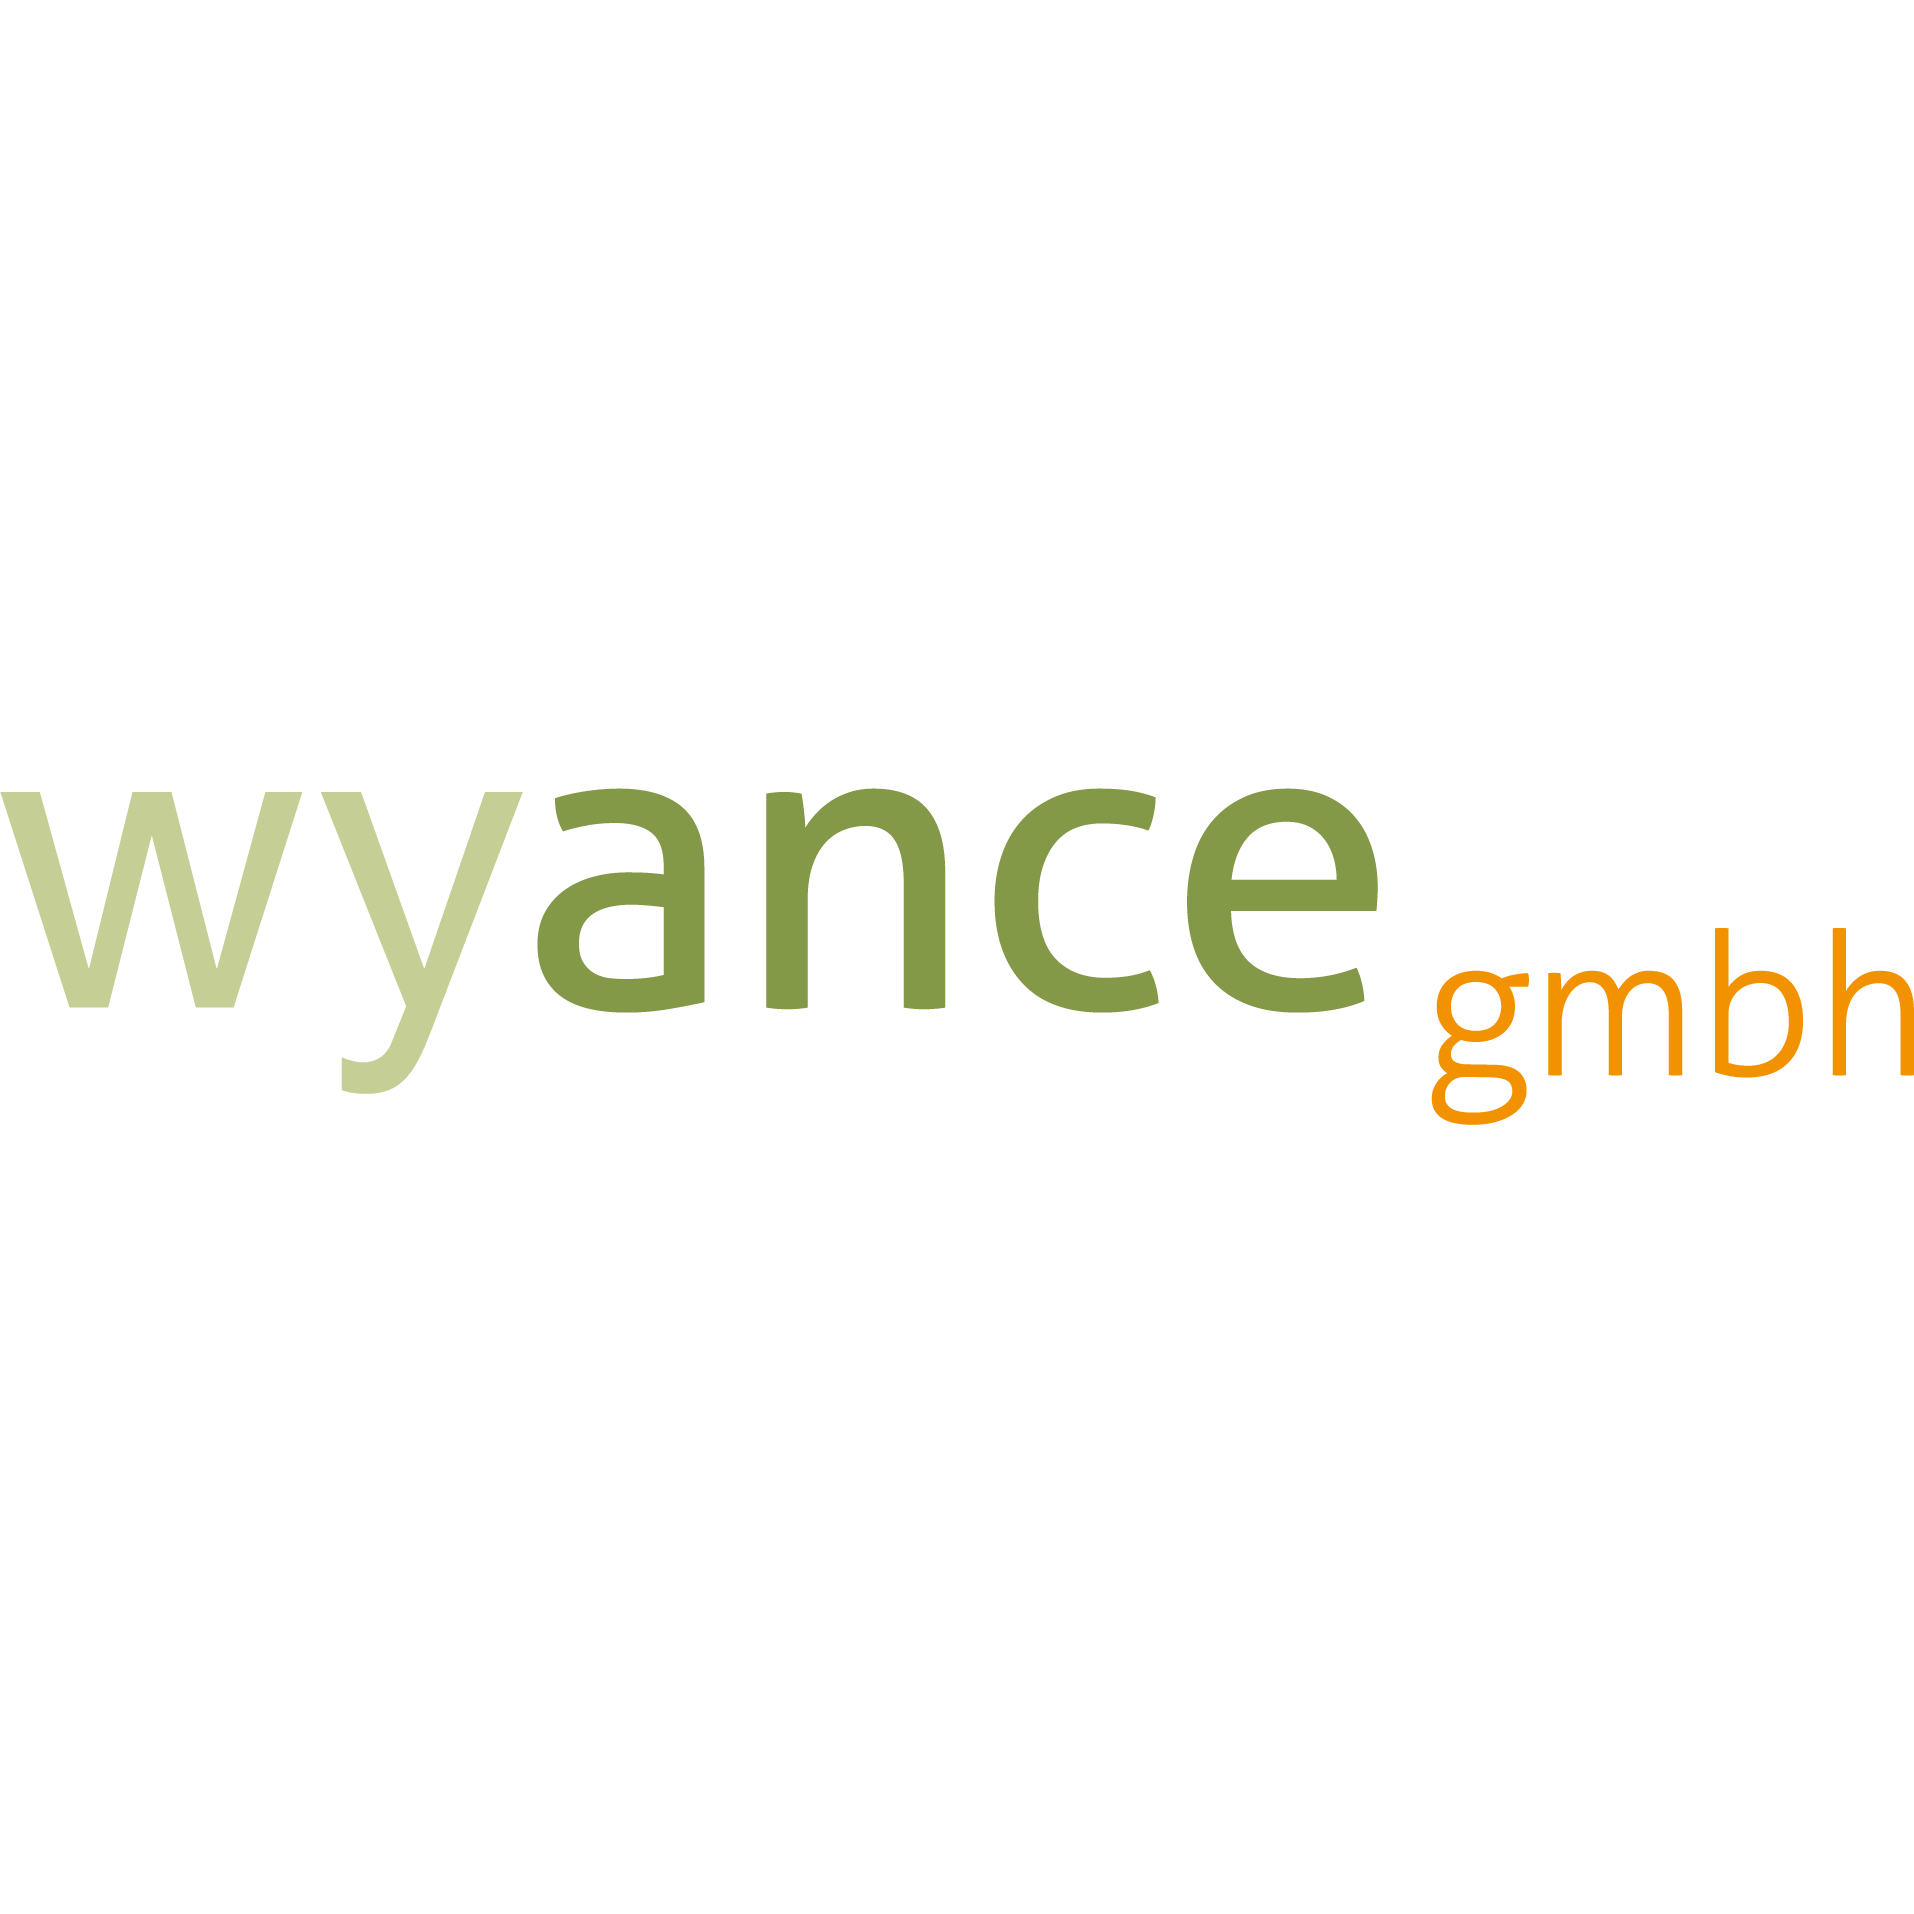 wyance gmbh Logo